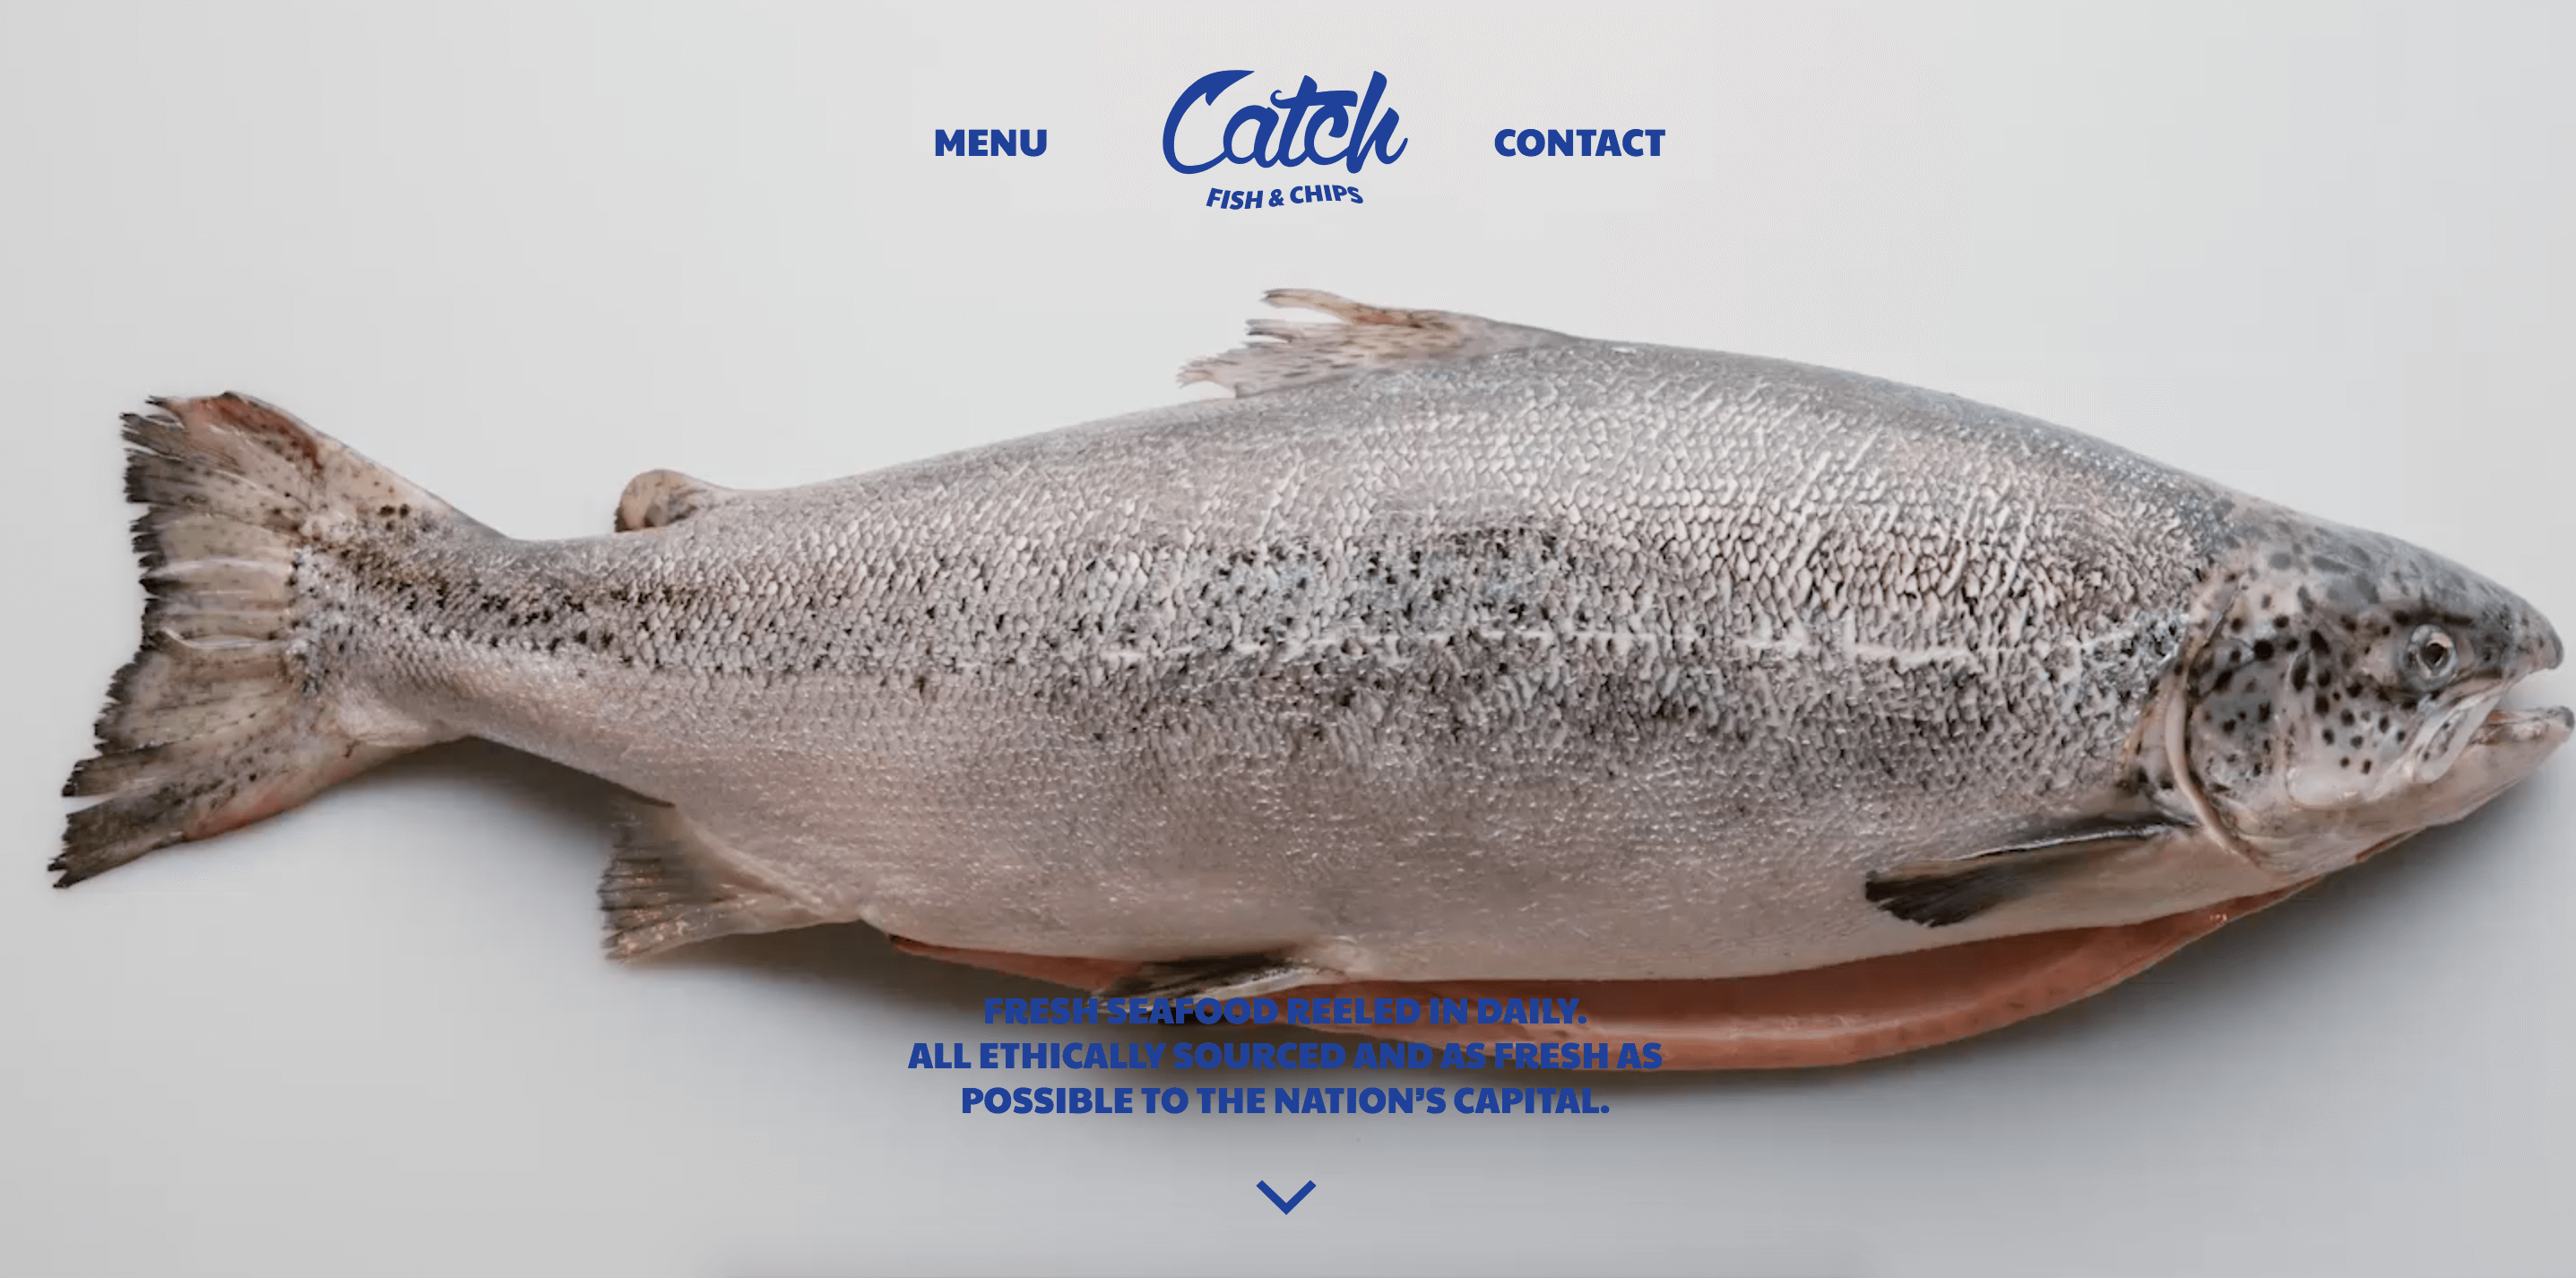 Catch Fish and Chips Restaurant Website Design